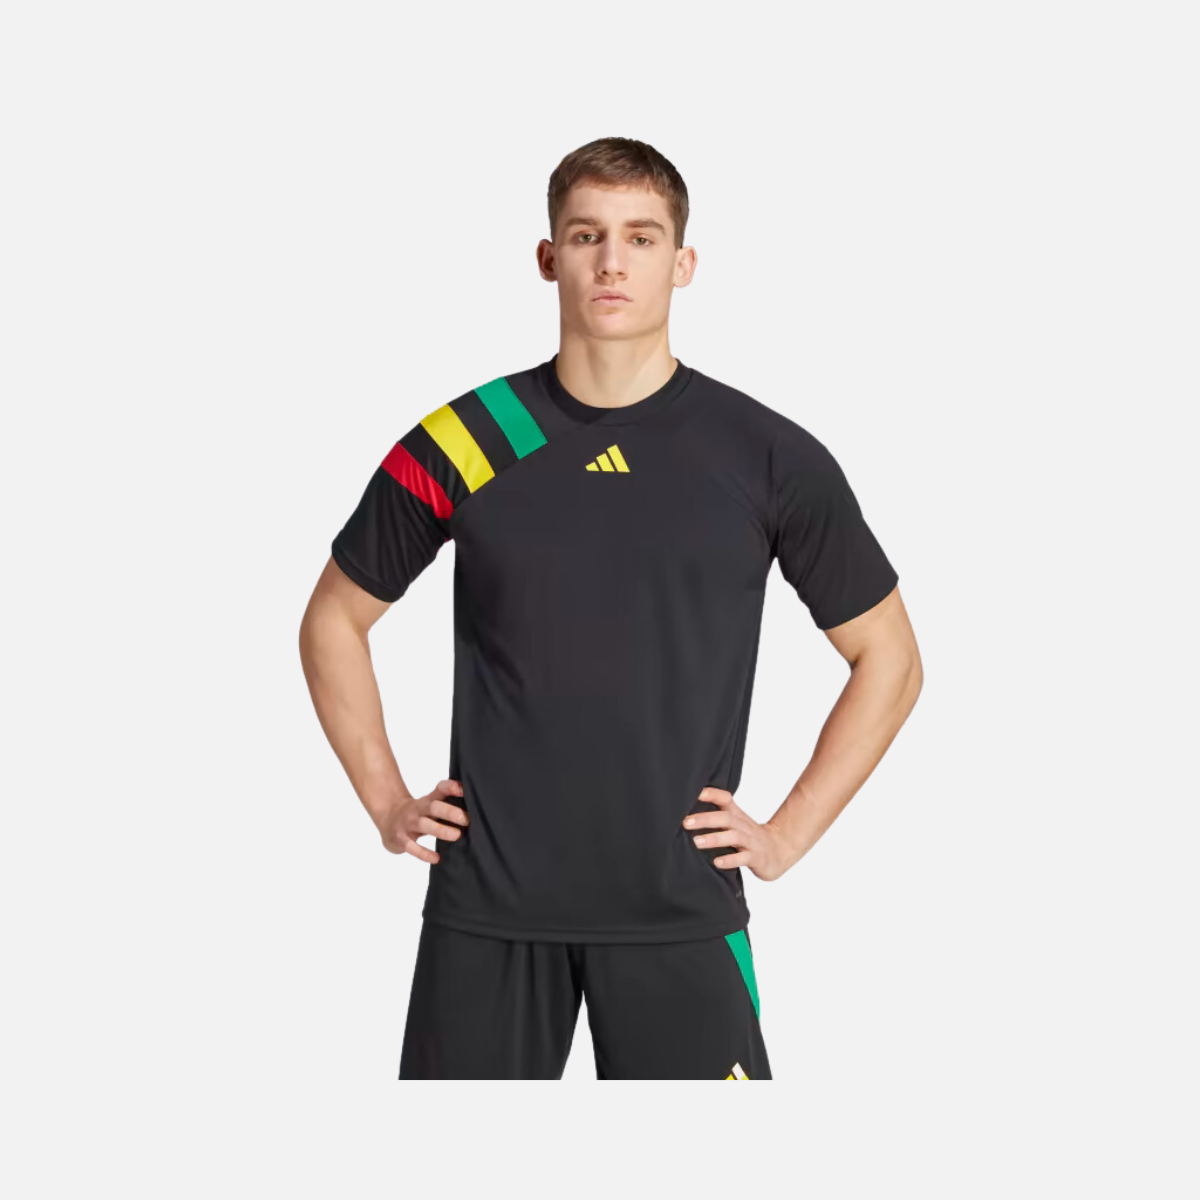 Adidas FORTORE 23 Men's Football Jersey -Black/Team Green/Team Yellow/Team Collegiate Red